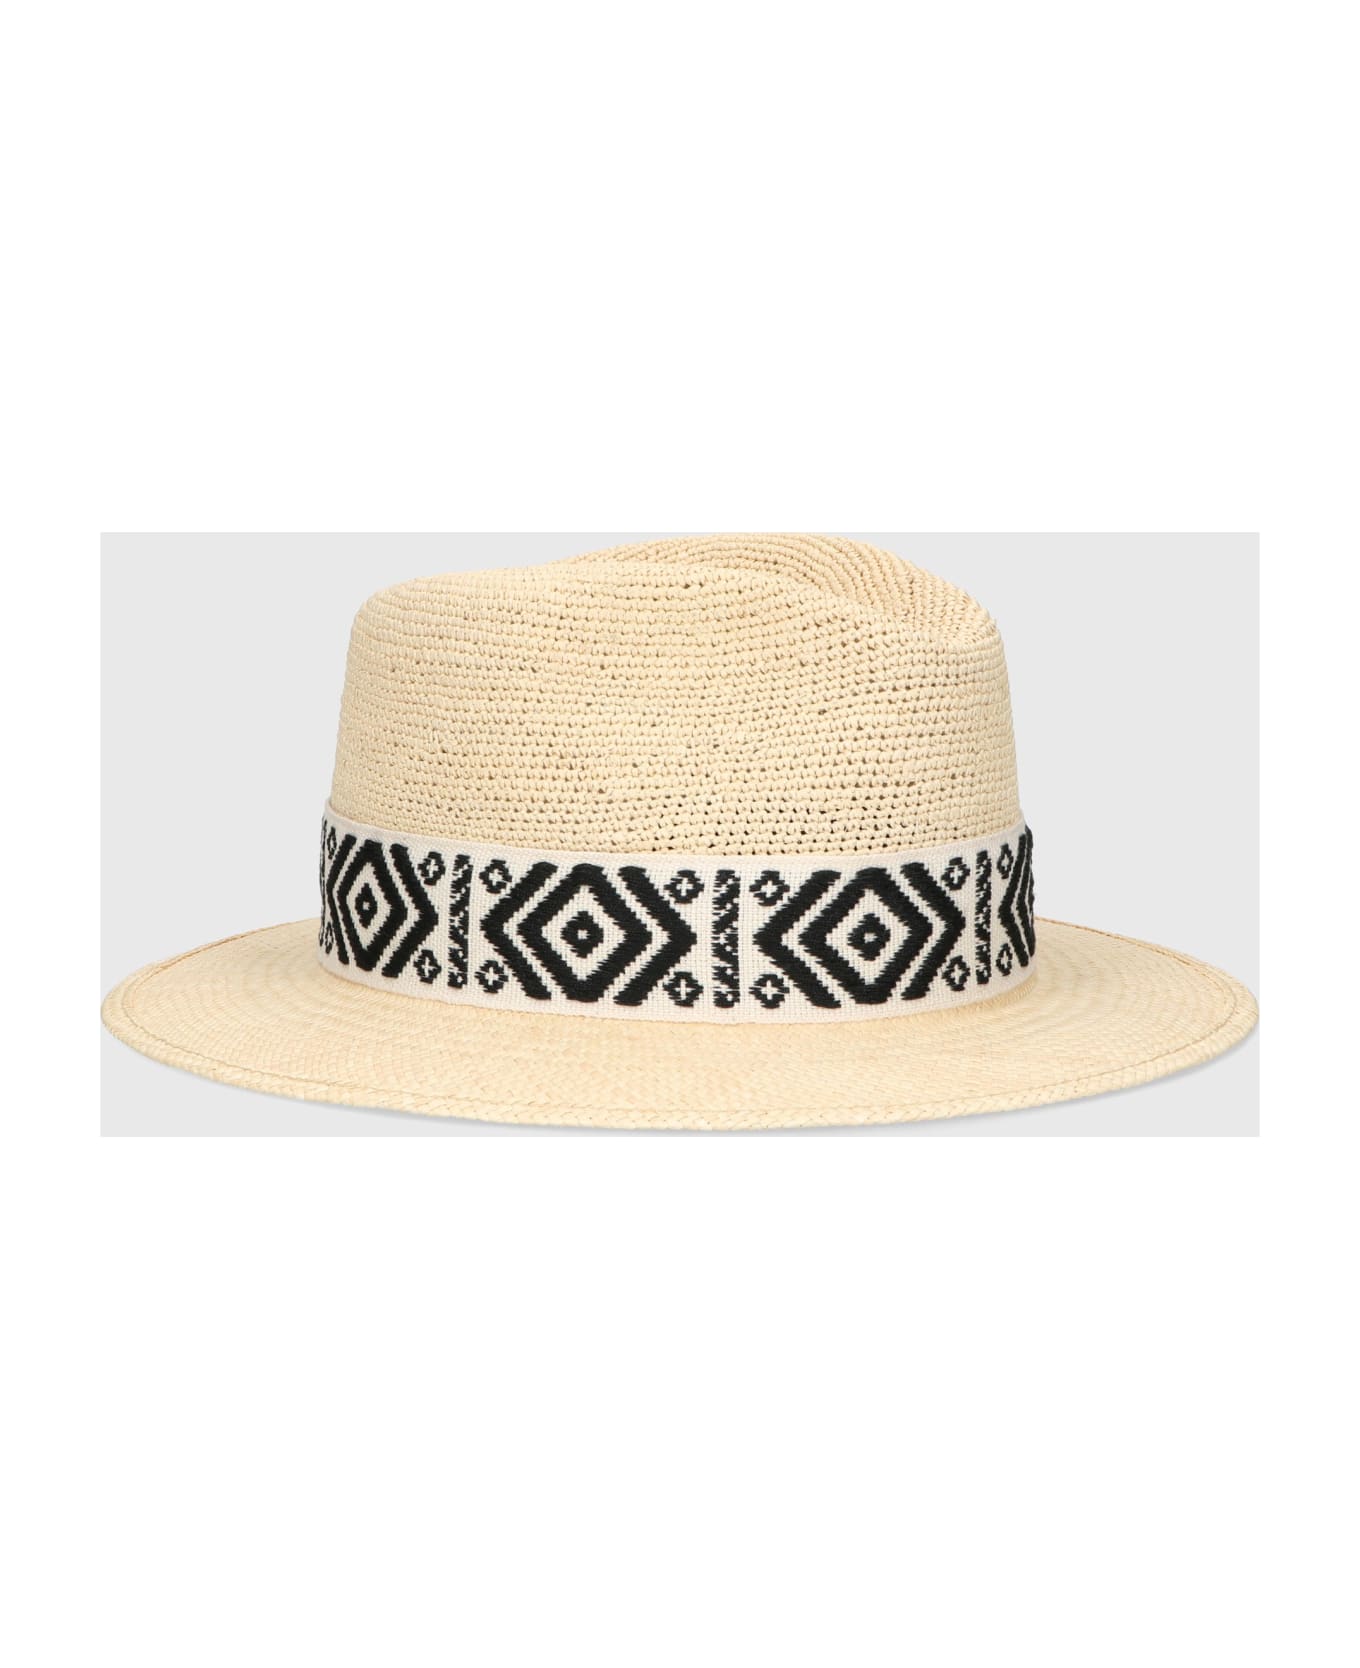 Borsalino Country Panama Semicrochet - NATURAL, PATTERNED BLACK/CREAM HAT BAND 帽子